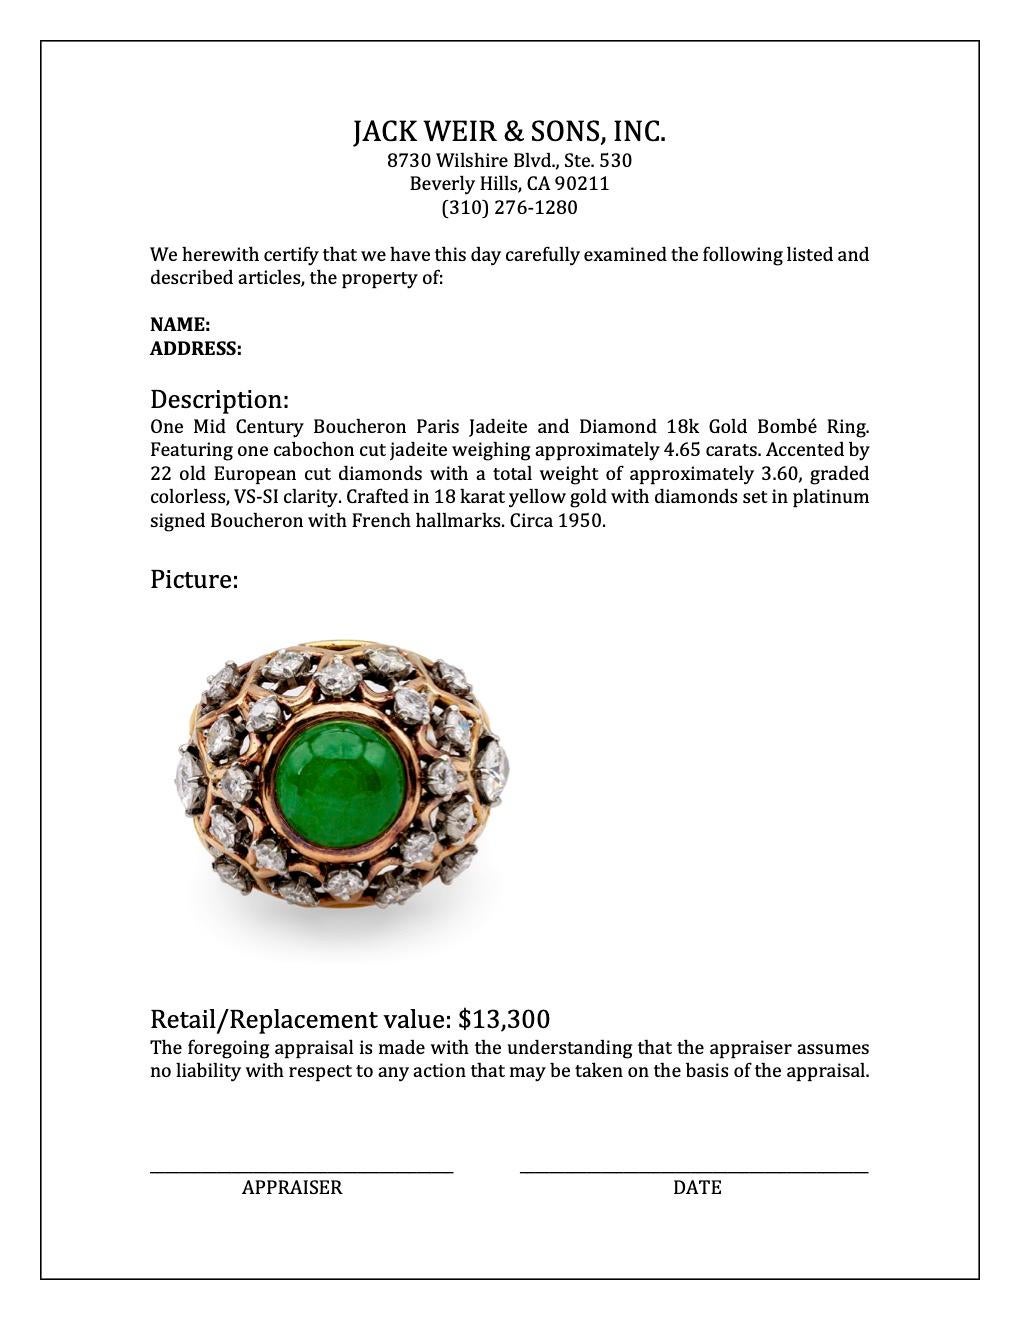 Women's or Men's Mid Century Boucheron Paris Jadeite and Diamond 18k Gold Bombé Ring